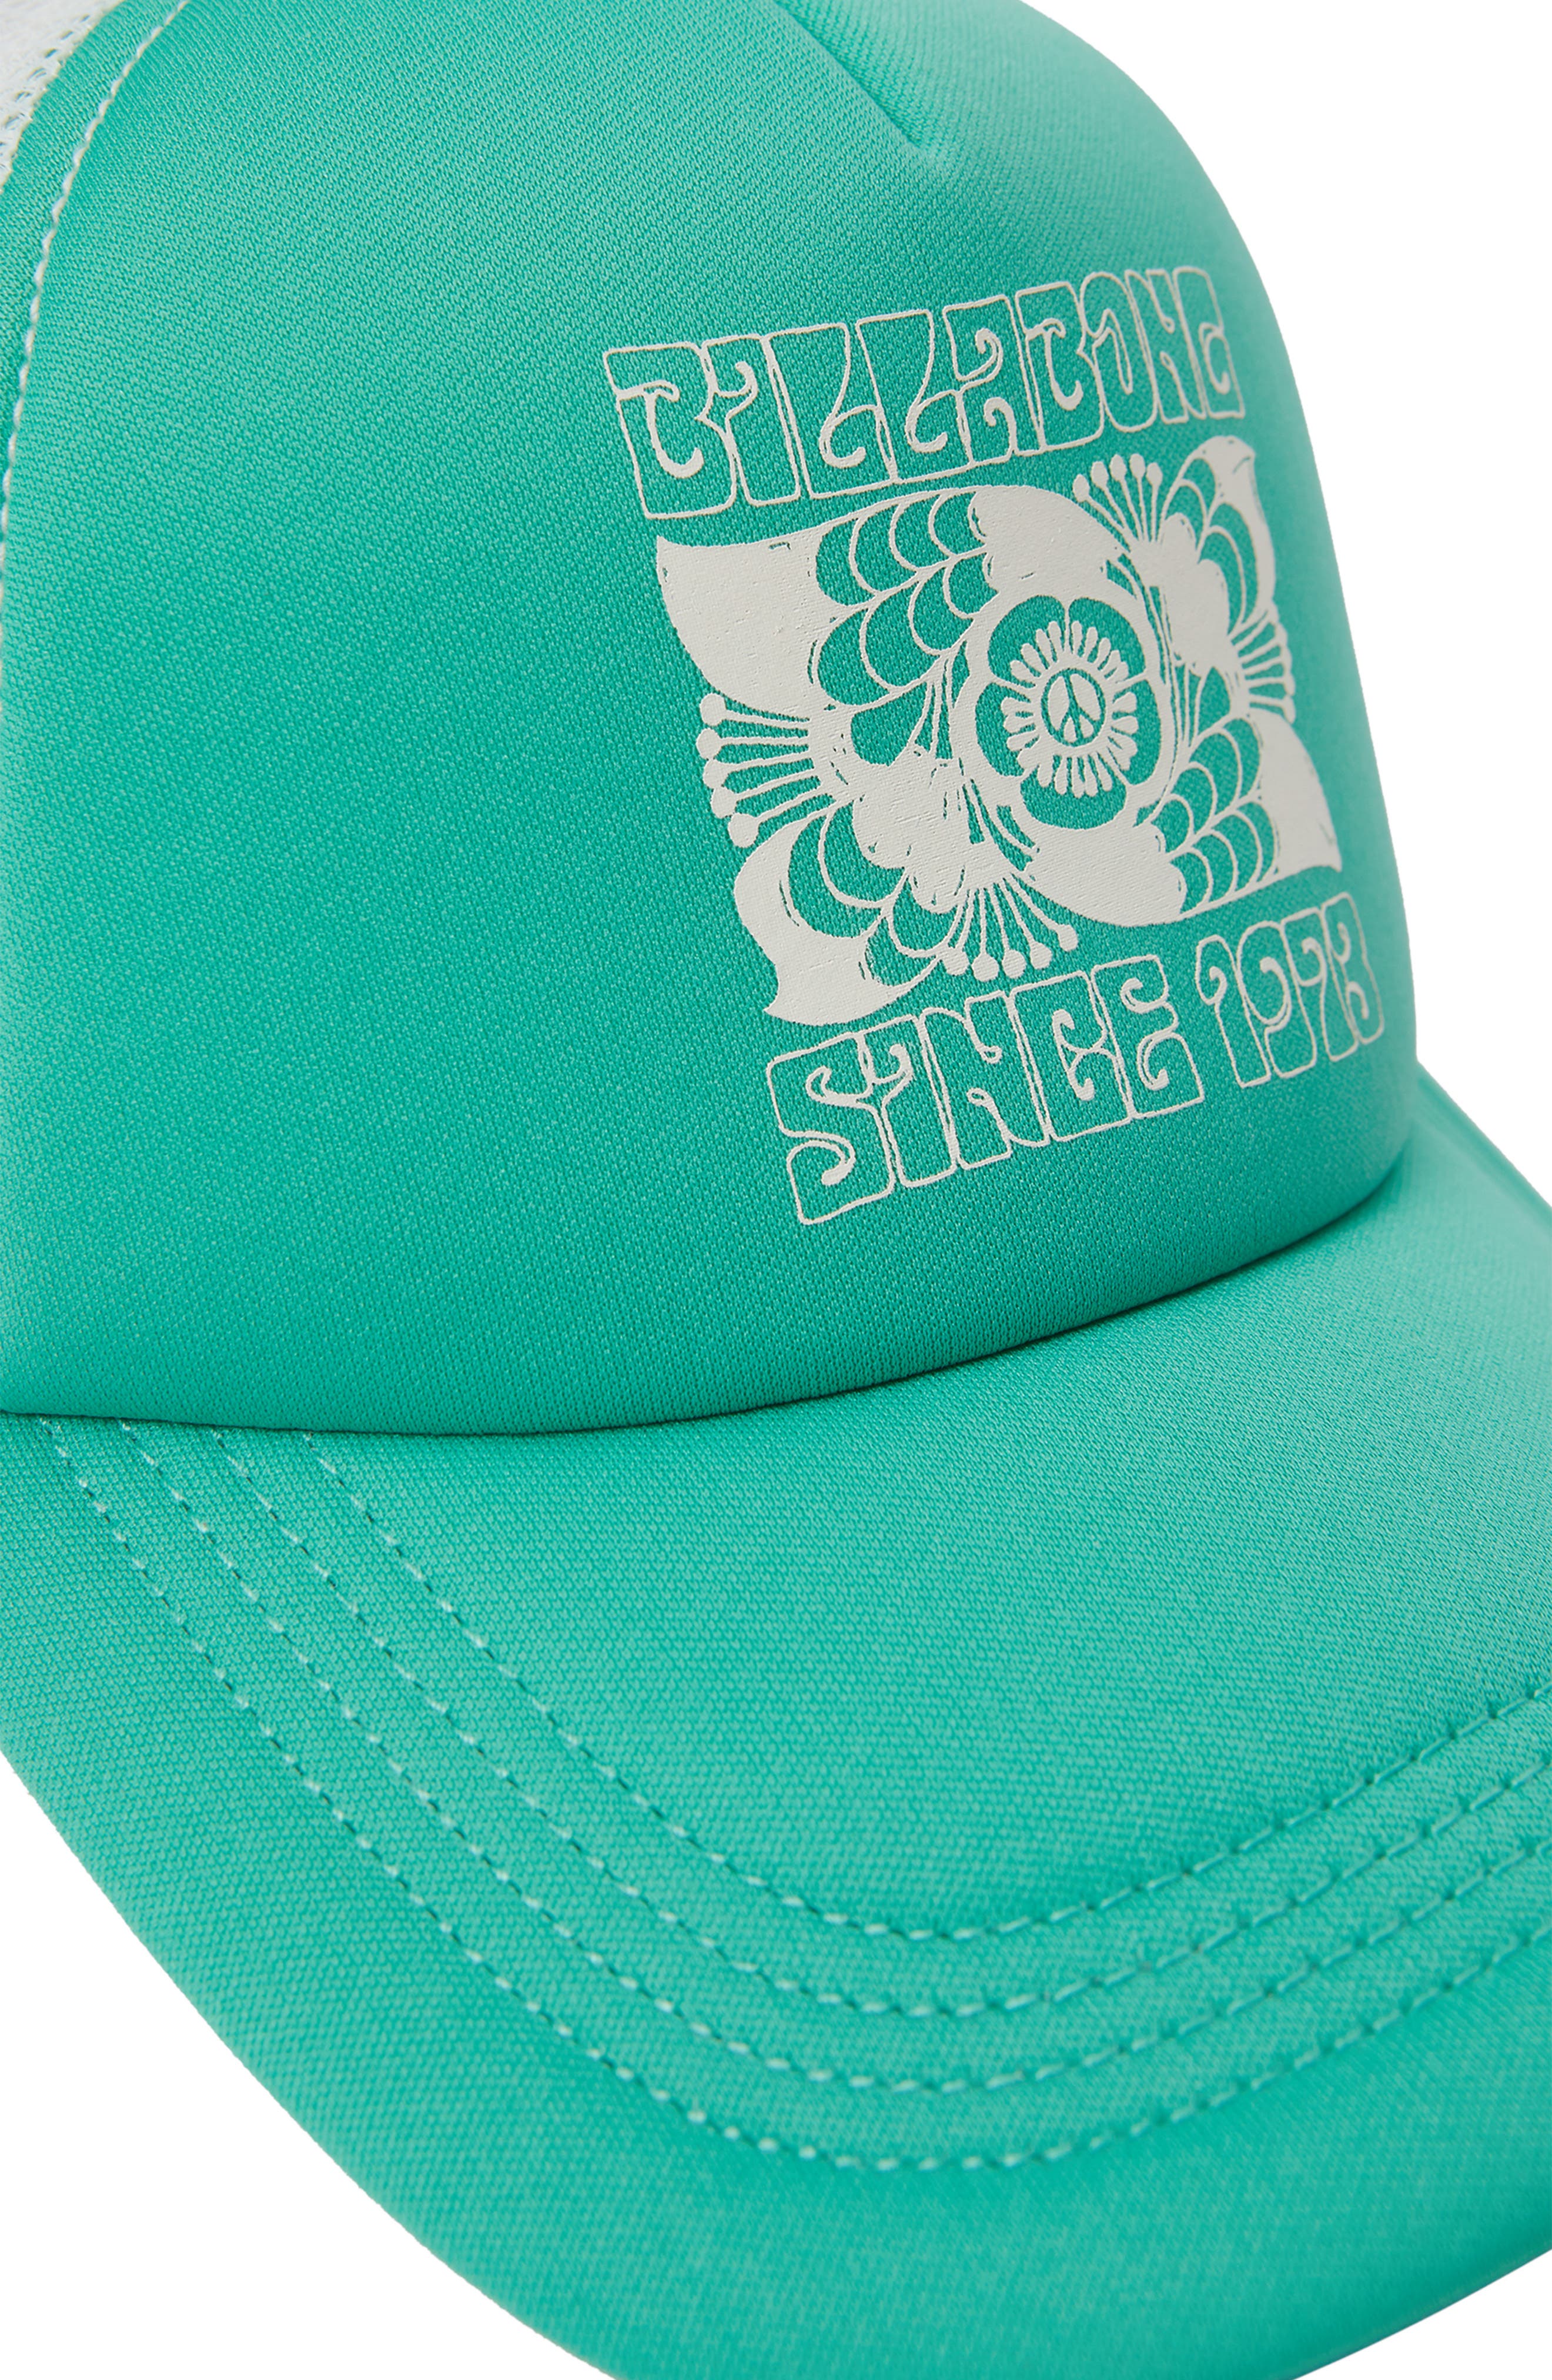 Spezialisiert auf Markenprodukte Billabong Across Waves in Smart Closet Trucker Hat Sweet | Grass